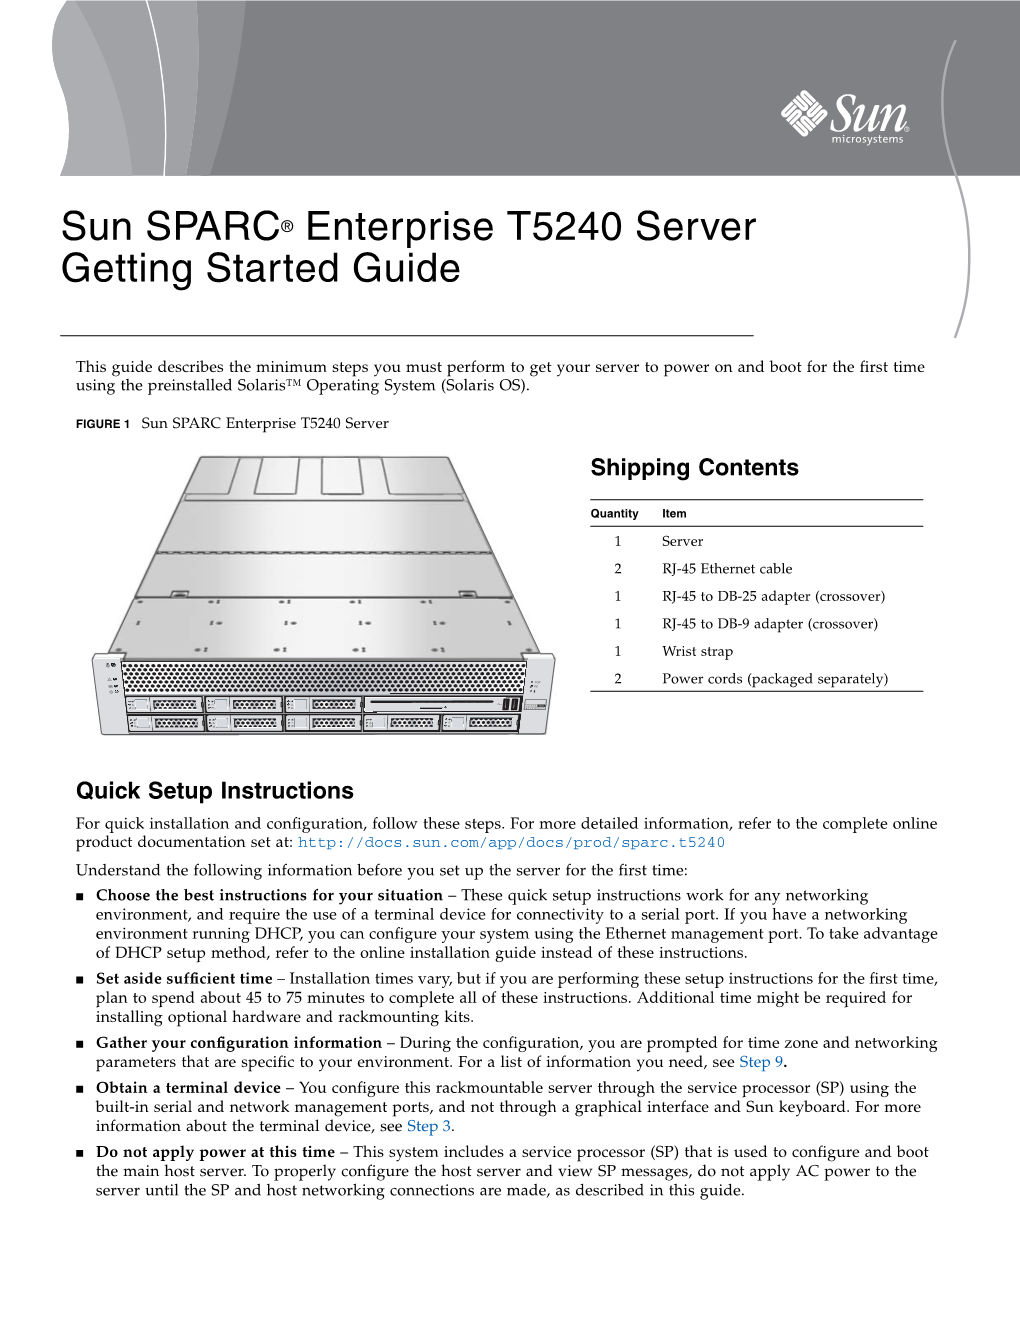 Sun SPARC Enterprise T5240 Server Getting Started Guide, Part Number 820-3521-10